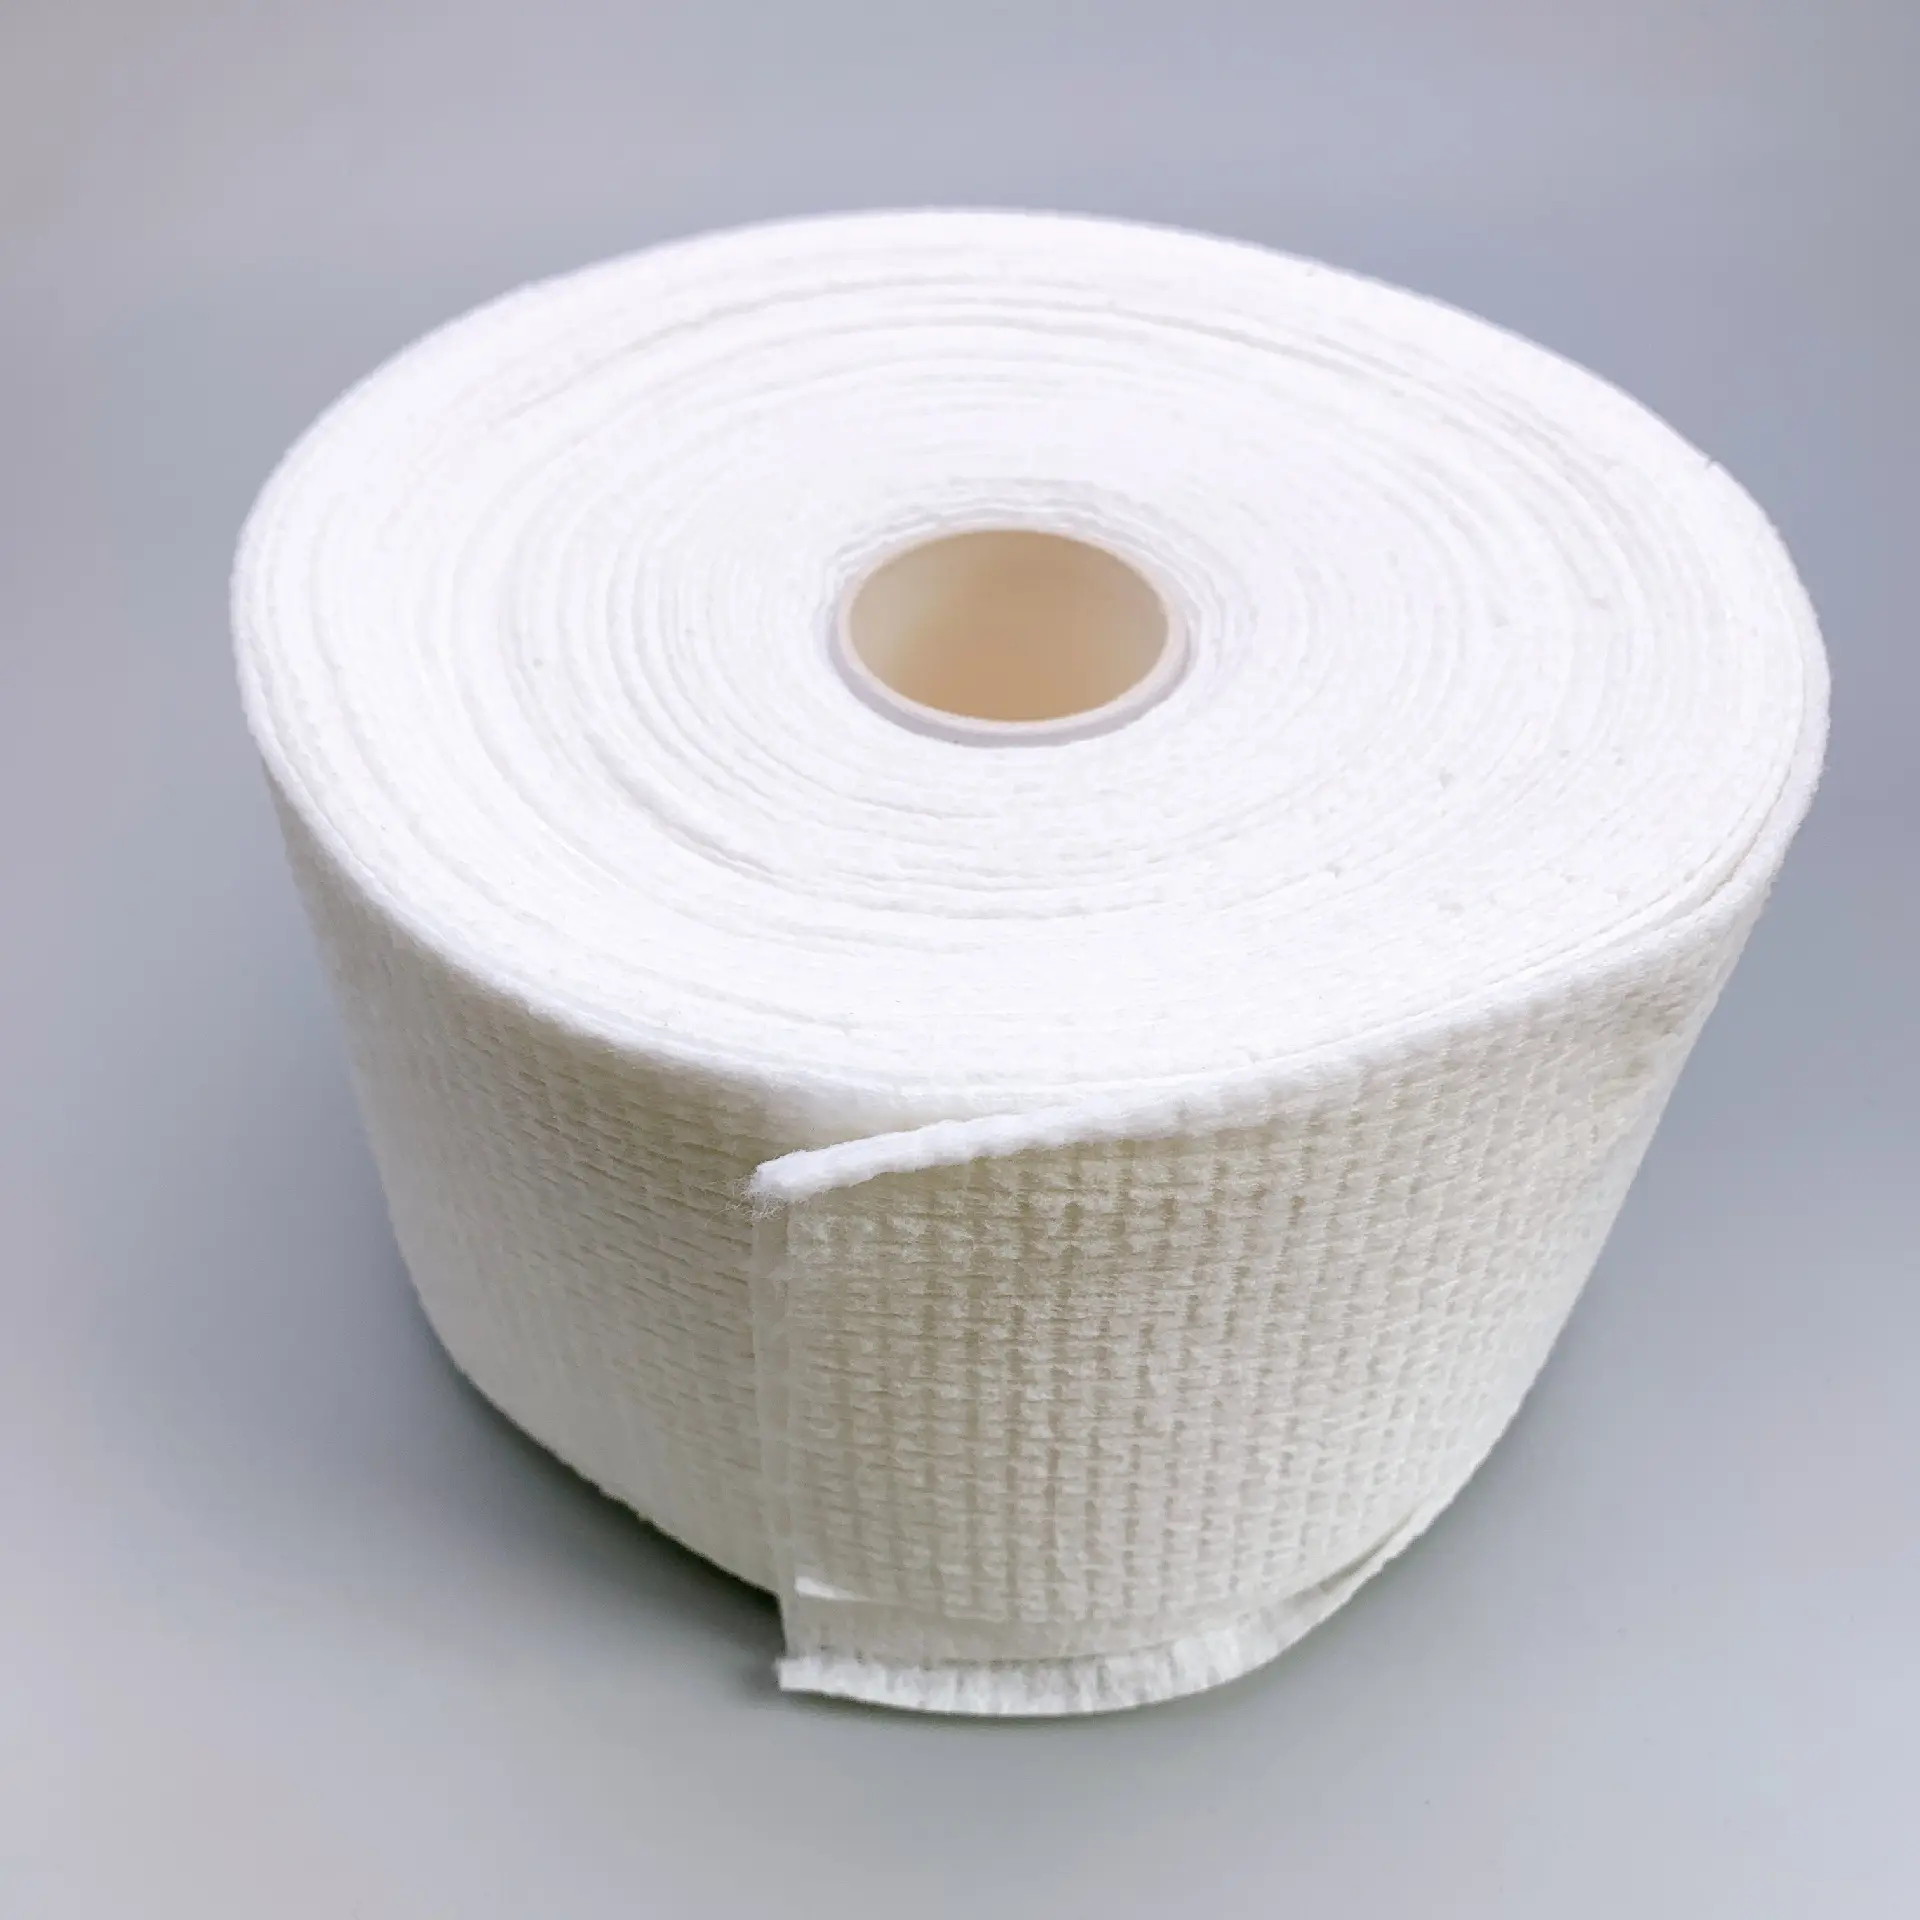 Hot Sale Chemical-Free 100% Pure Cotton spunlace Disposable Makeup Removing Wipes soft tissue paper